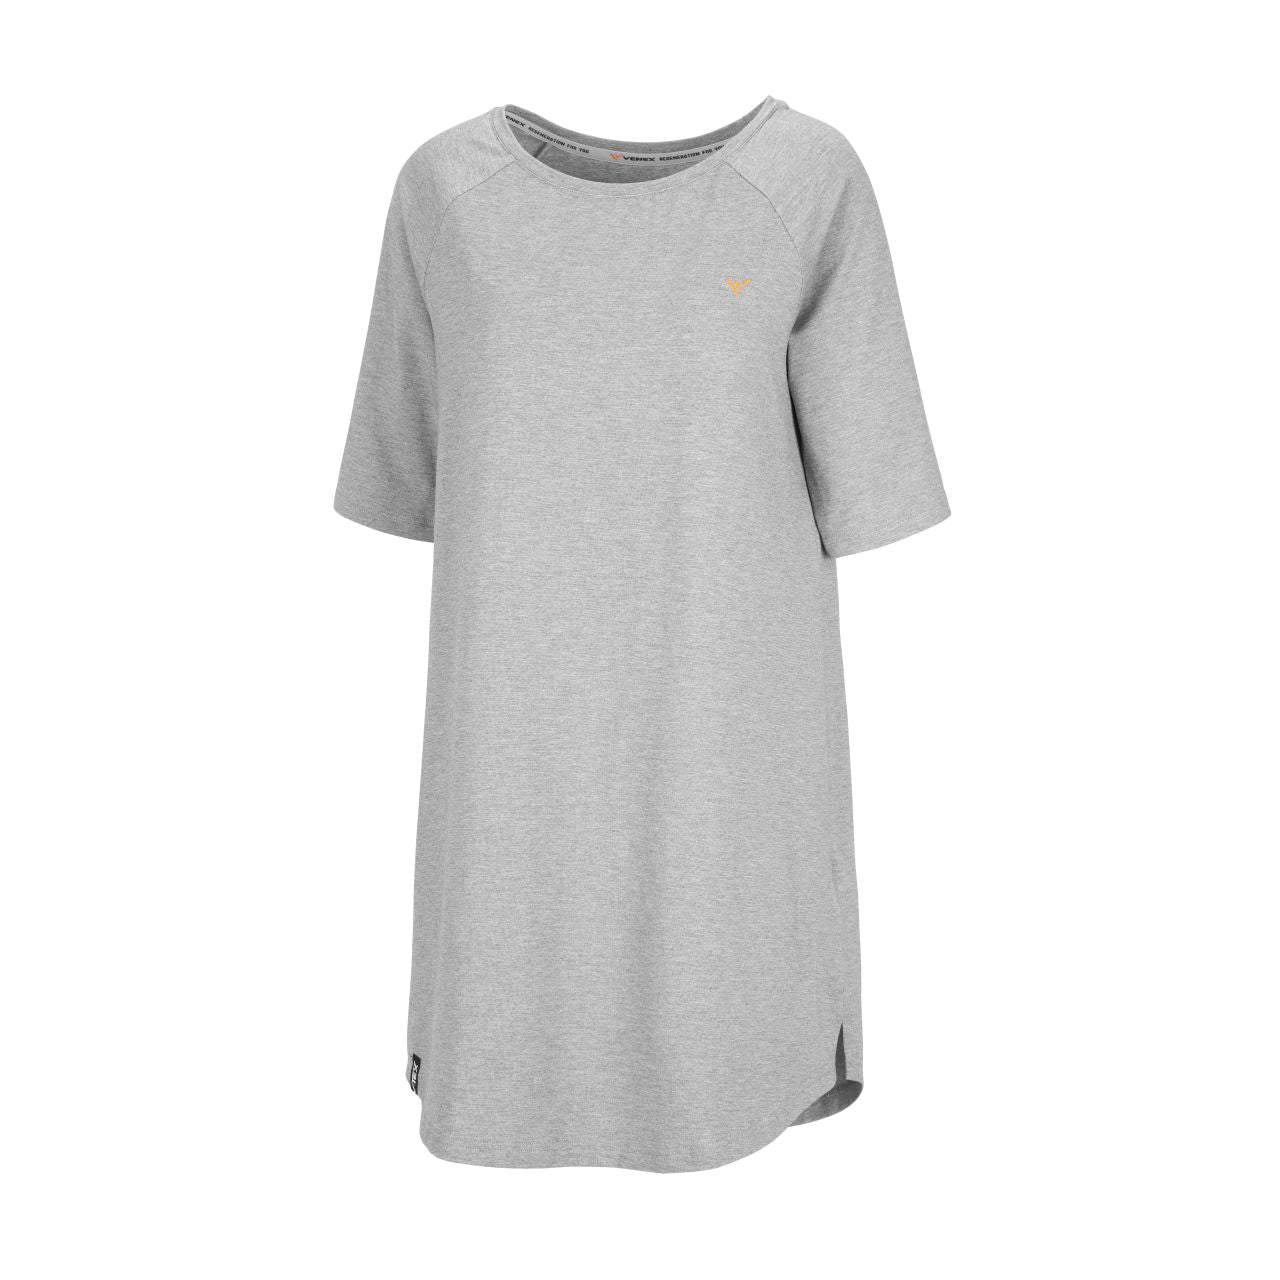 Yume Damen Schlafshirt - Grösse: 4XL - Farbe: Grau Melange